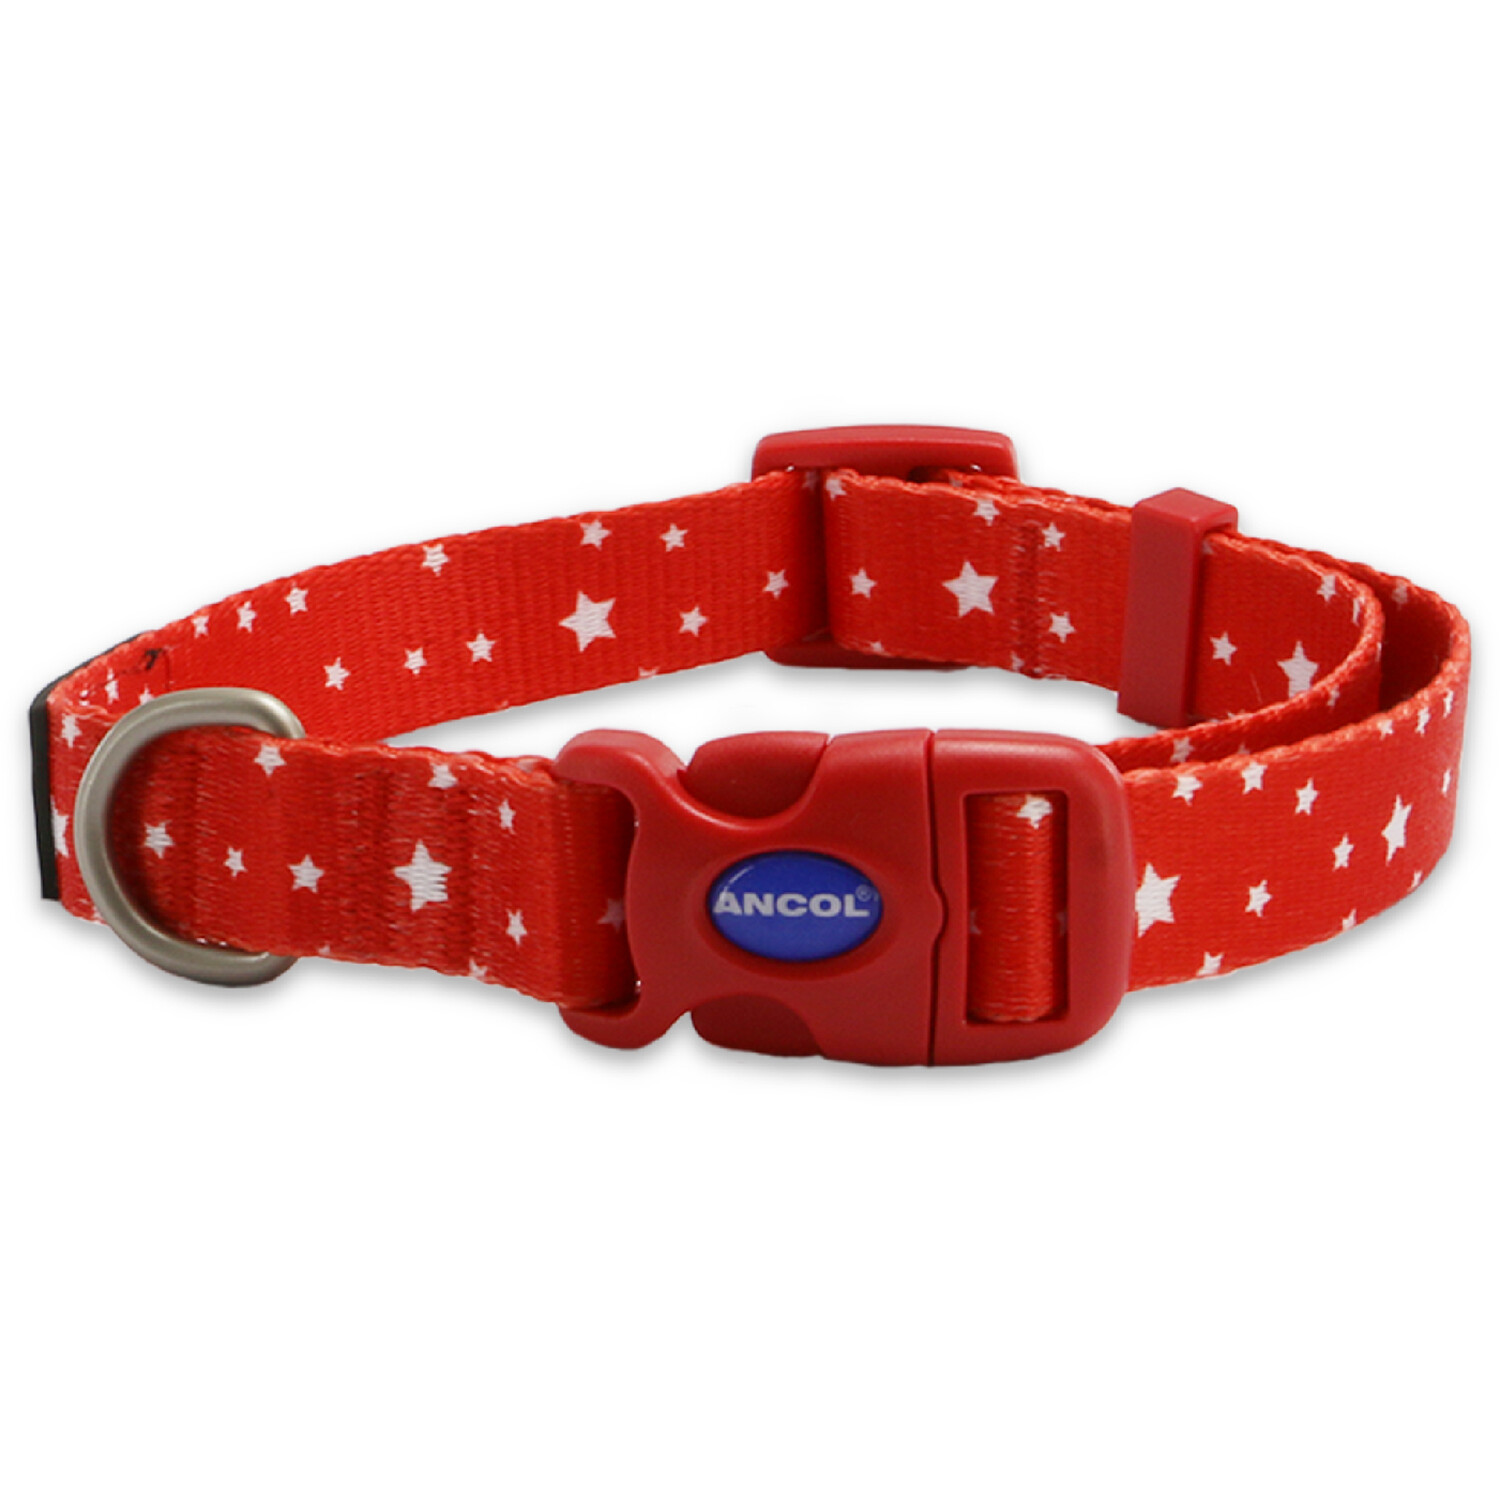 Star Patterned Dog Collar - Red / 30 - 50cm Neck Image